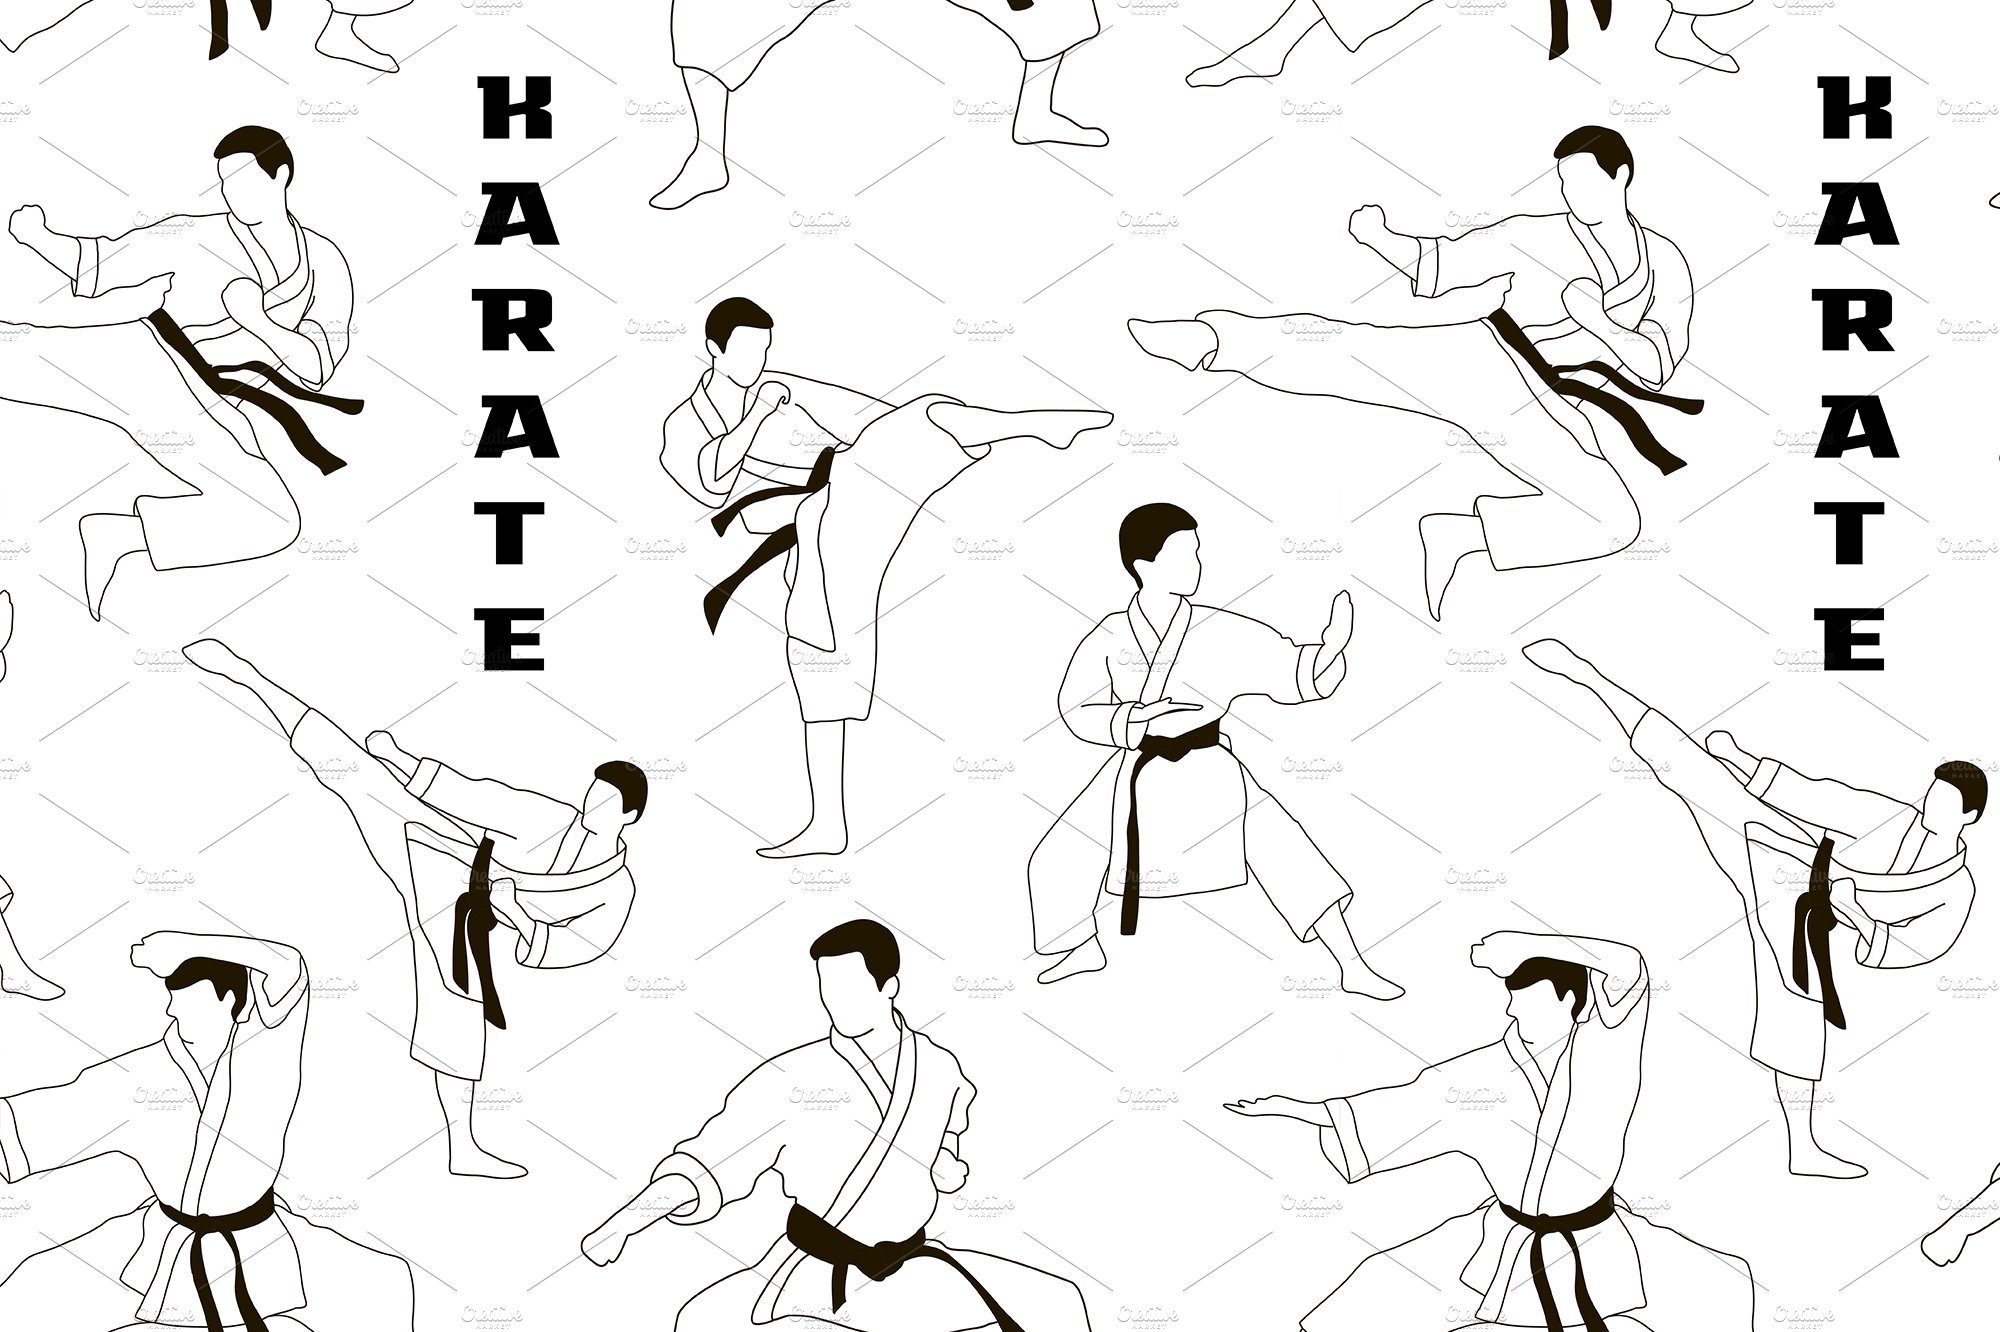 Karate set pattern cover image.